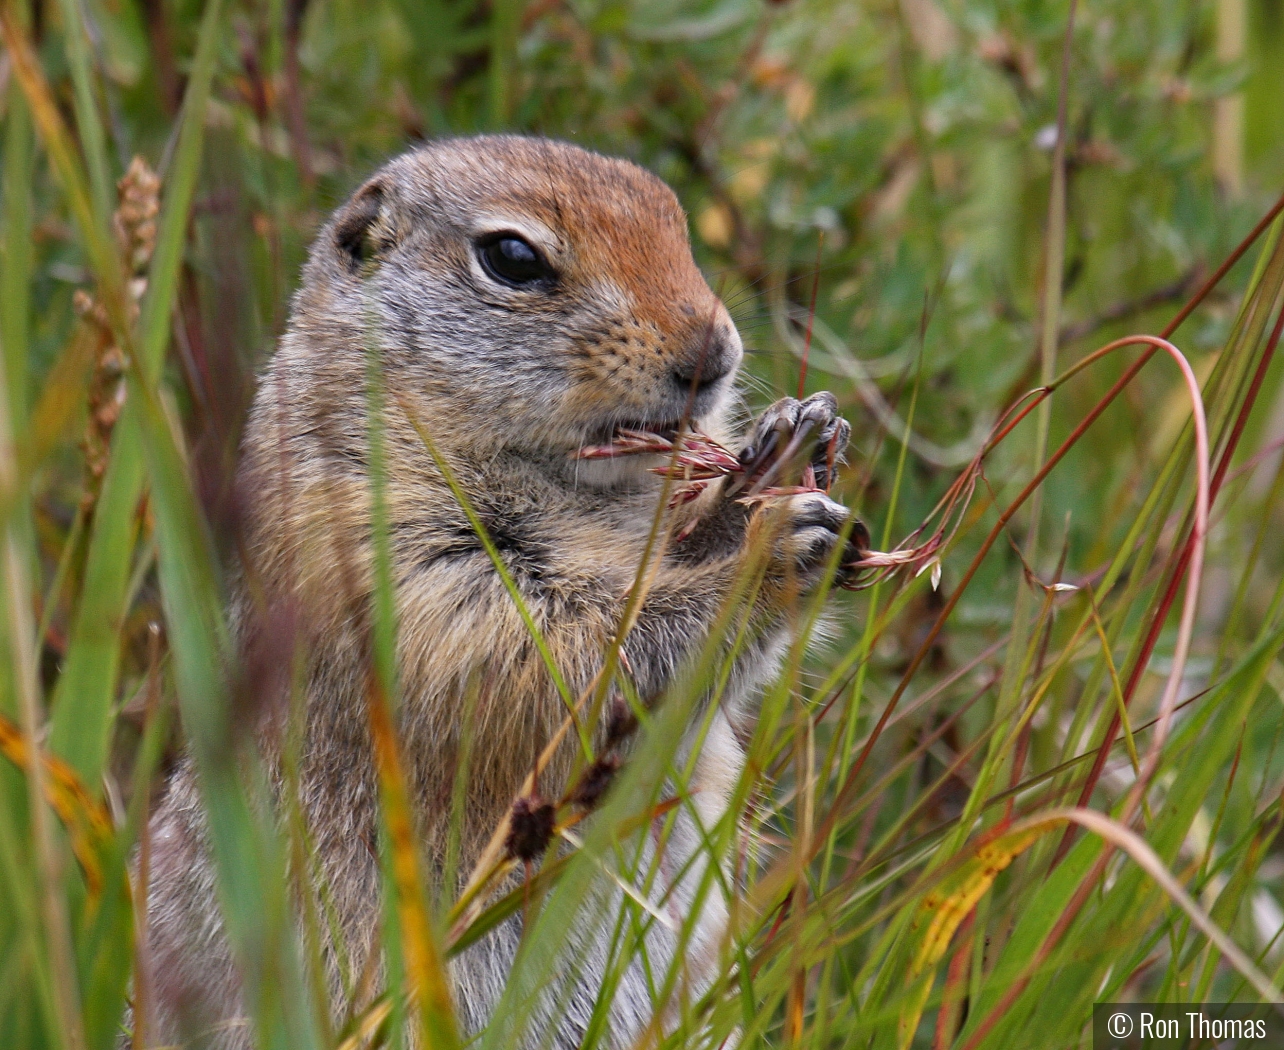 Ground squirrel by Ron Thomas